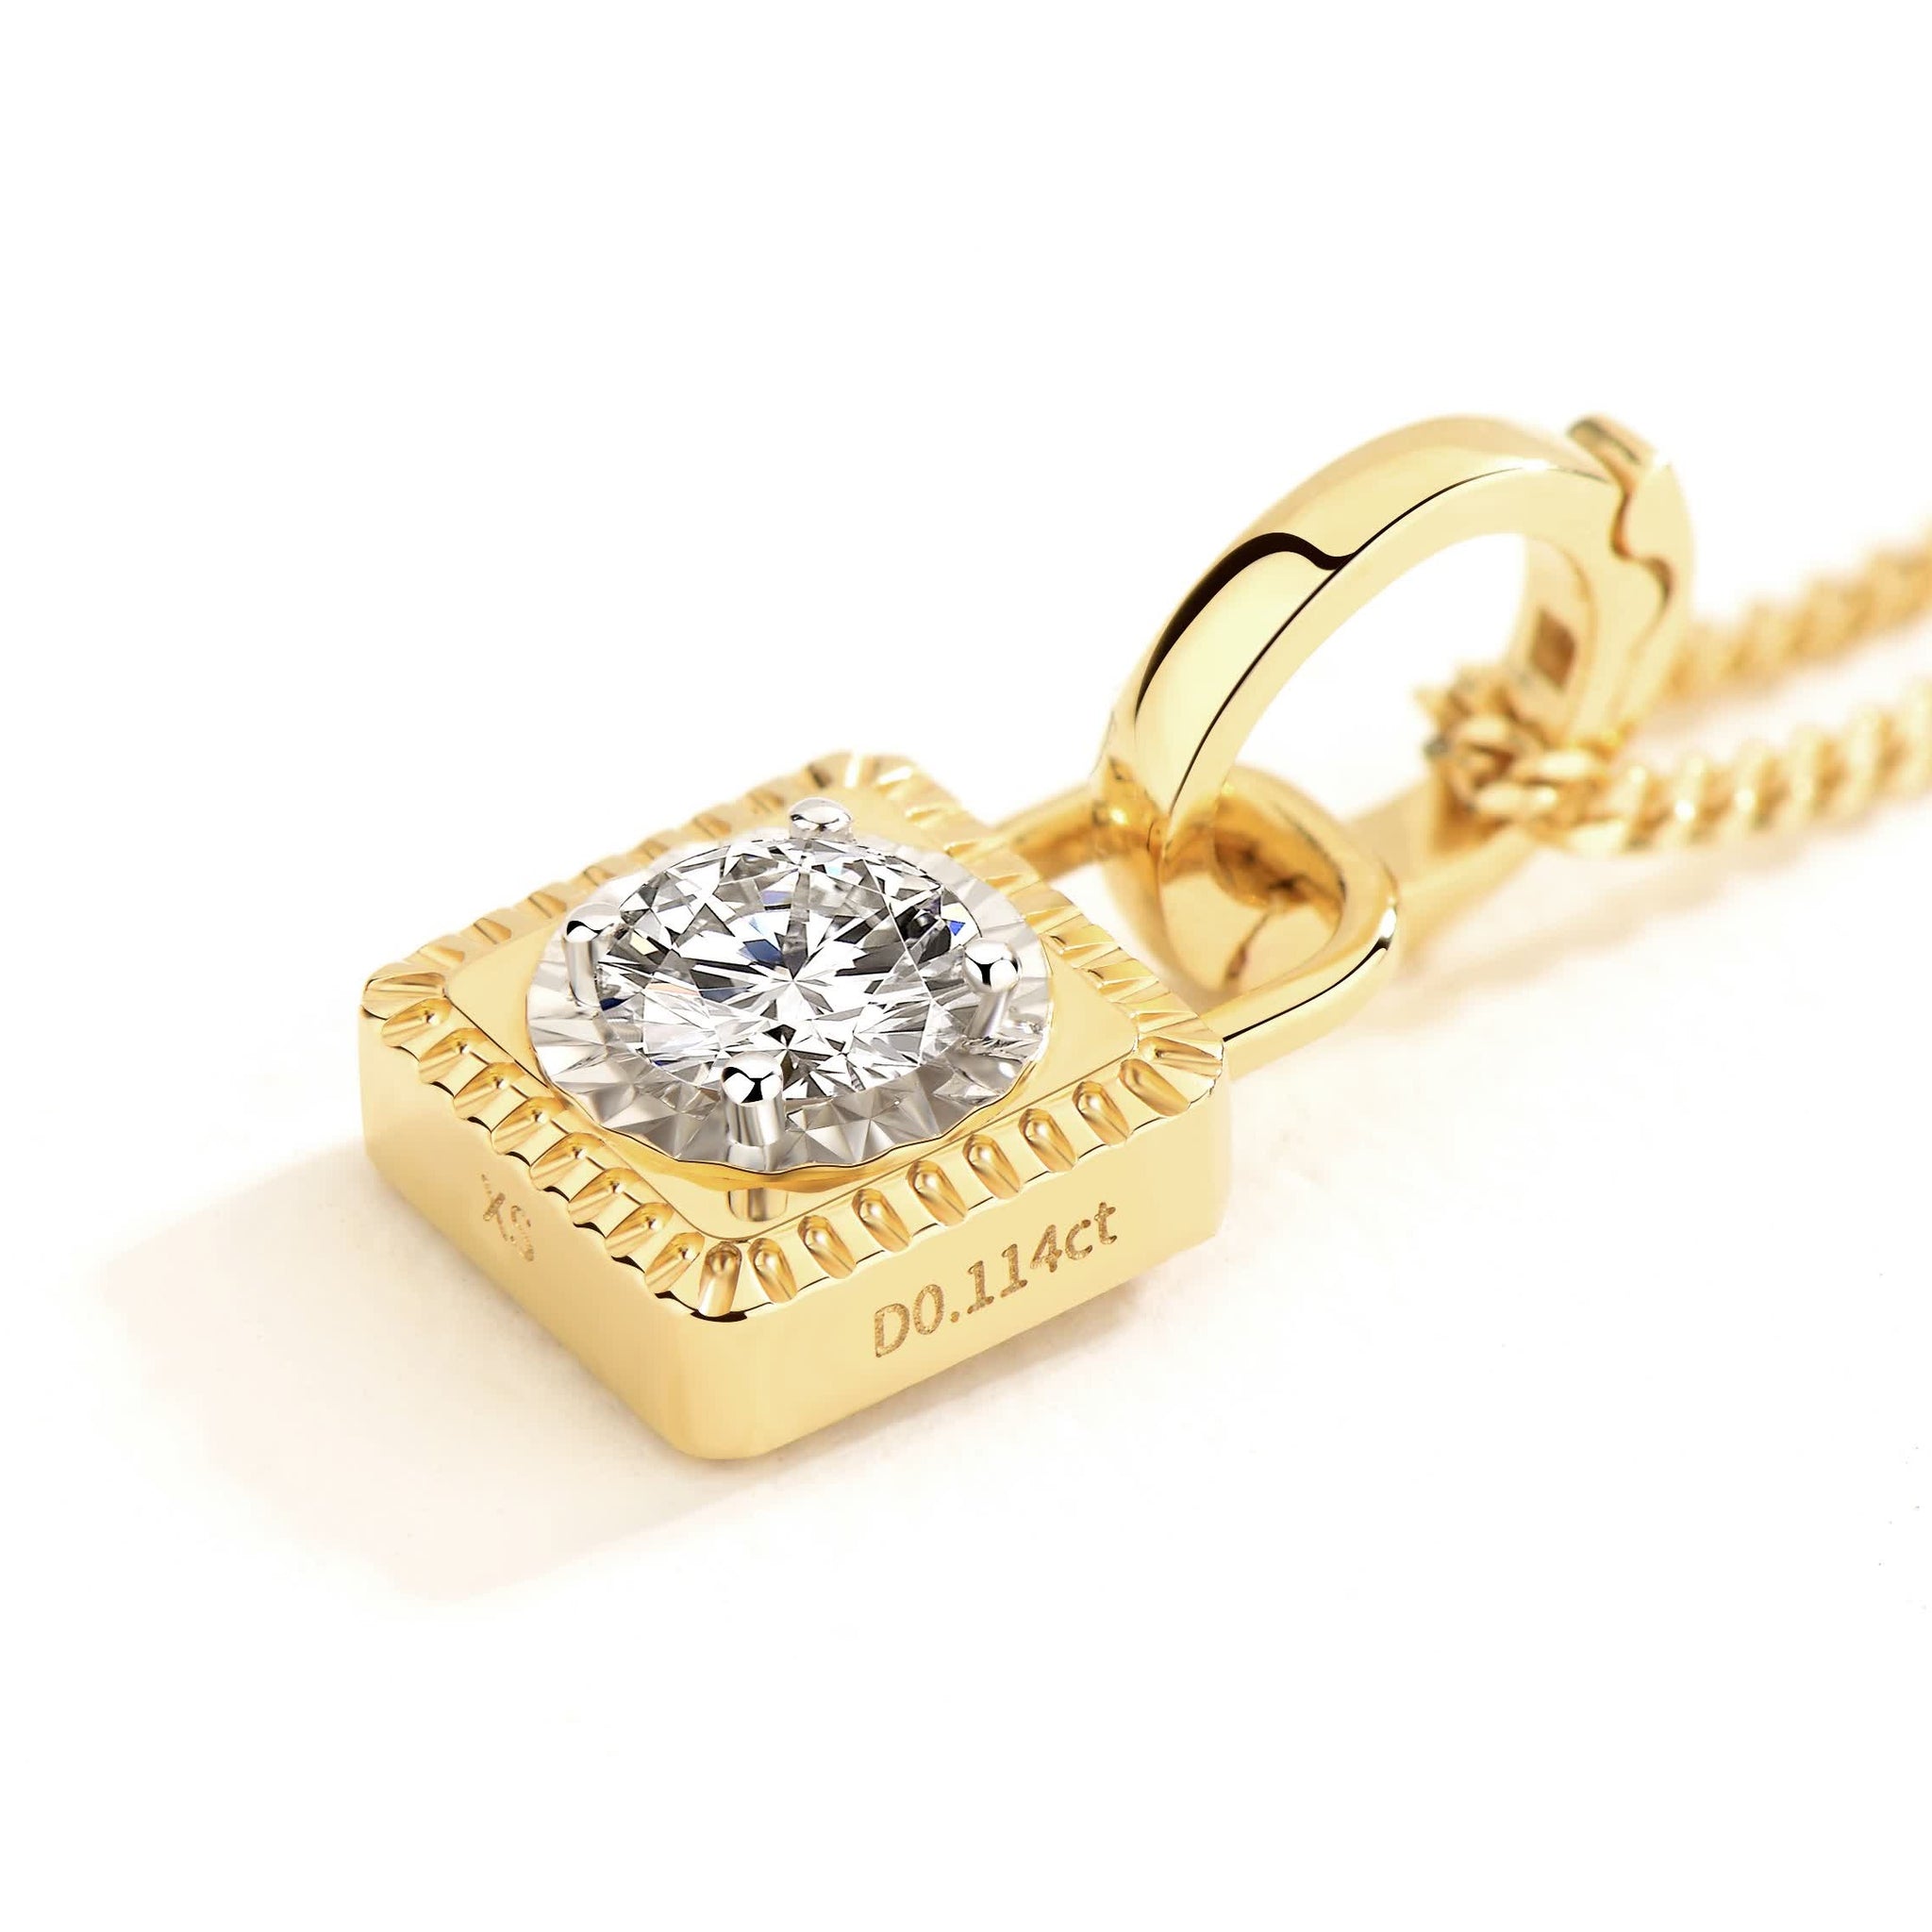 Unlock-18K 0.1ct Diamond Lock Gold Pendant